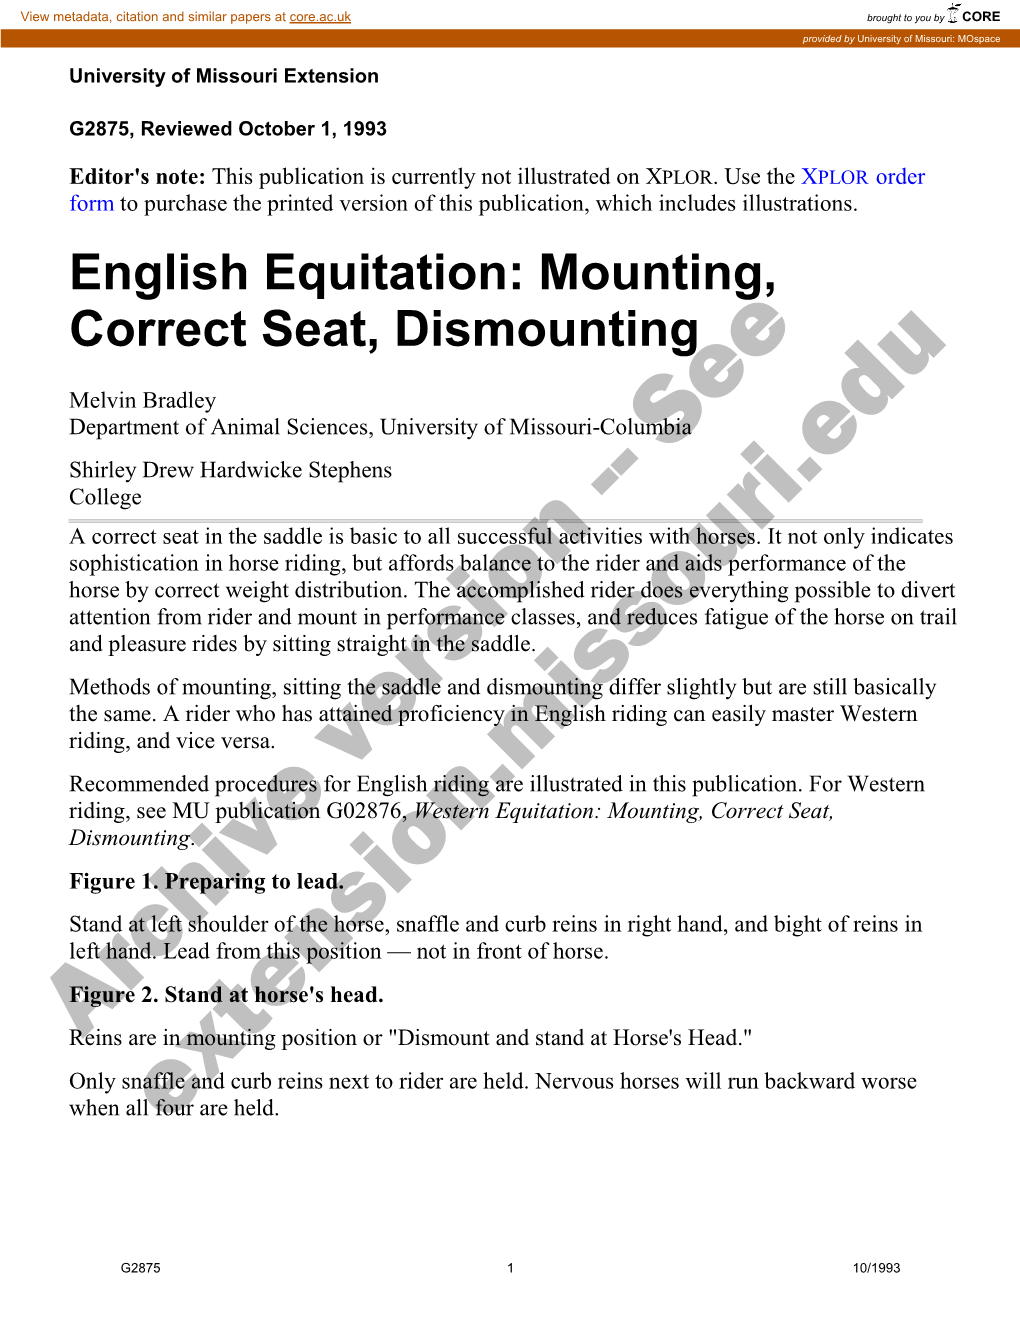 English Equitation: Mounting, Correct Seat, Dismounting